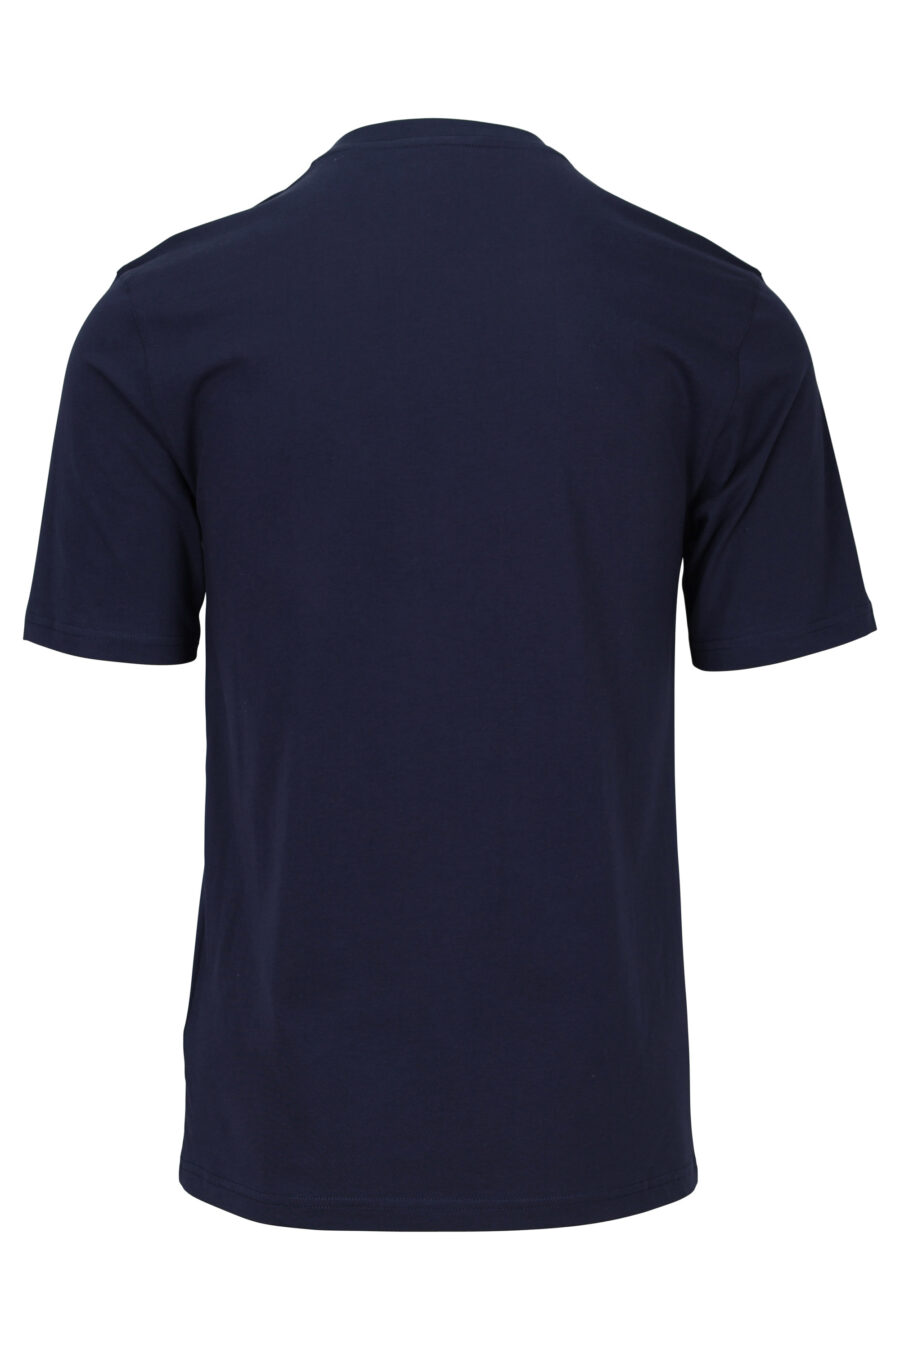 Blue T-shirt with mini logo "teddy tailor" - 667113150833 1